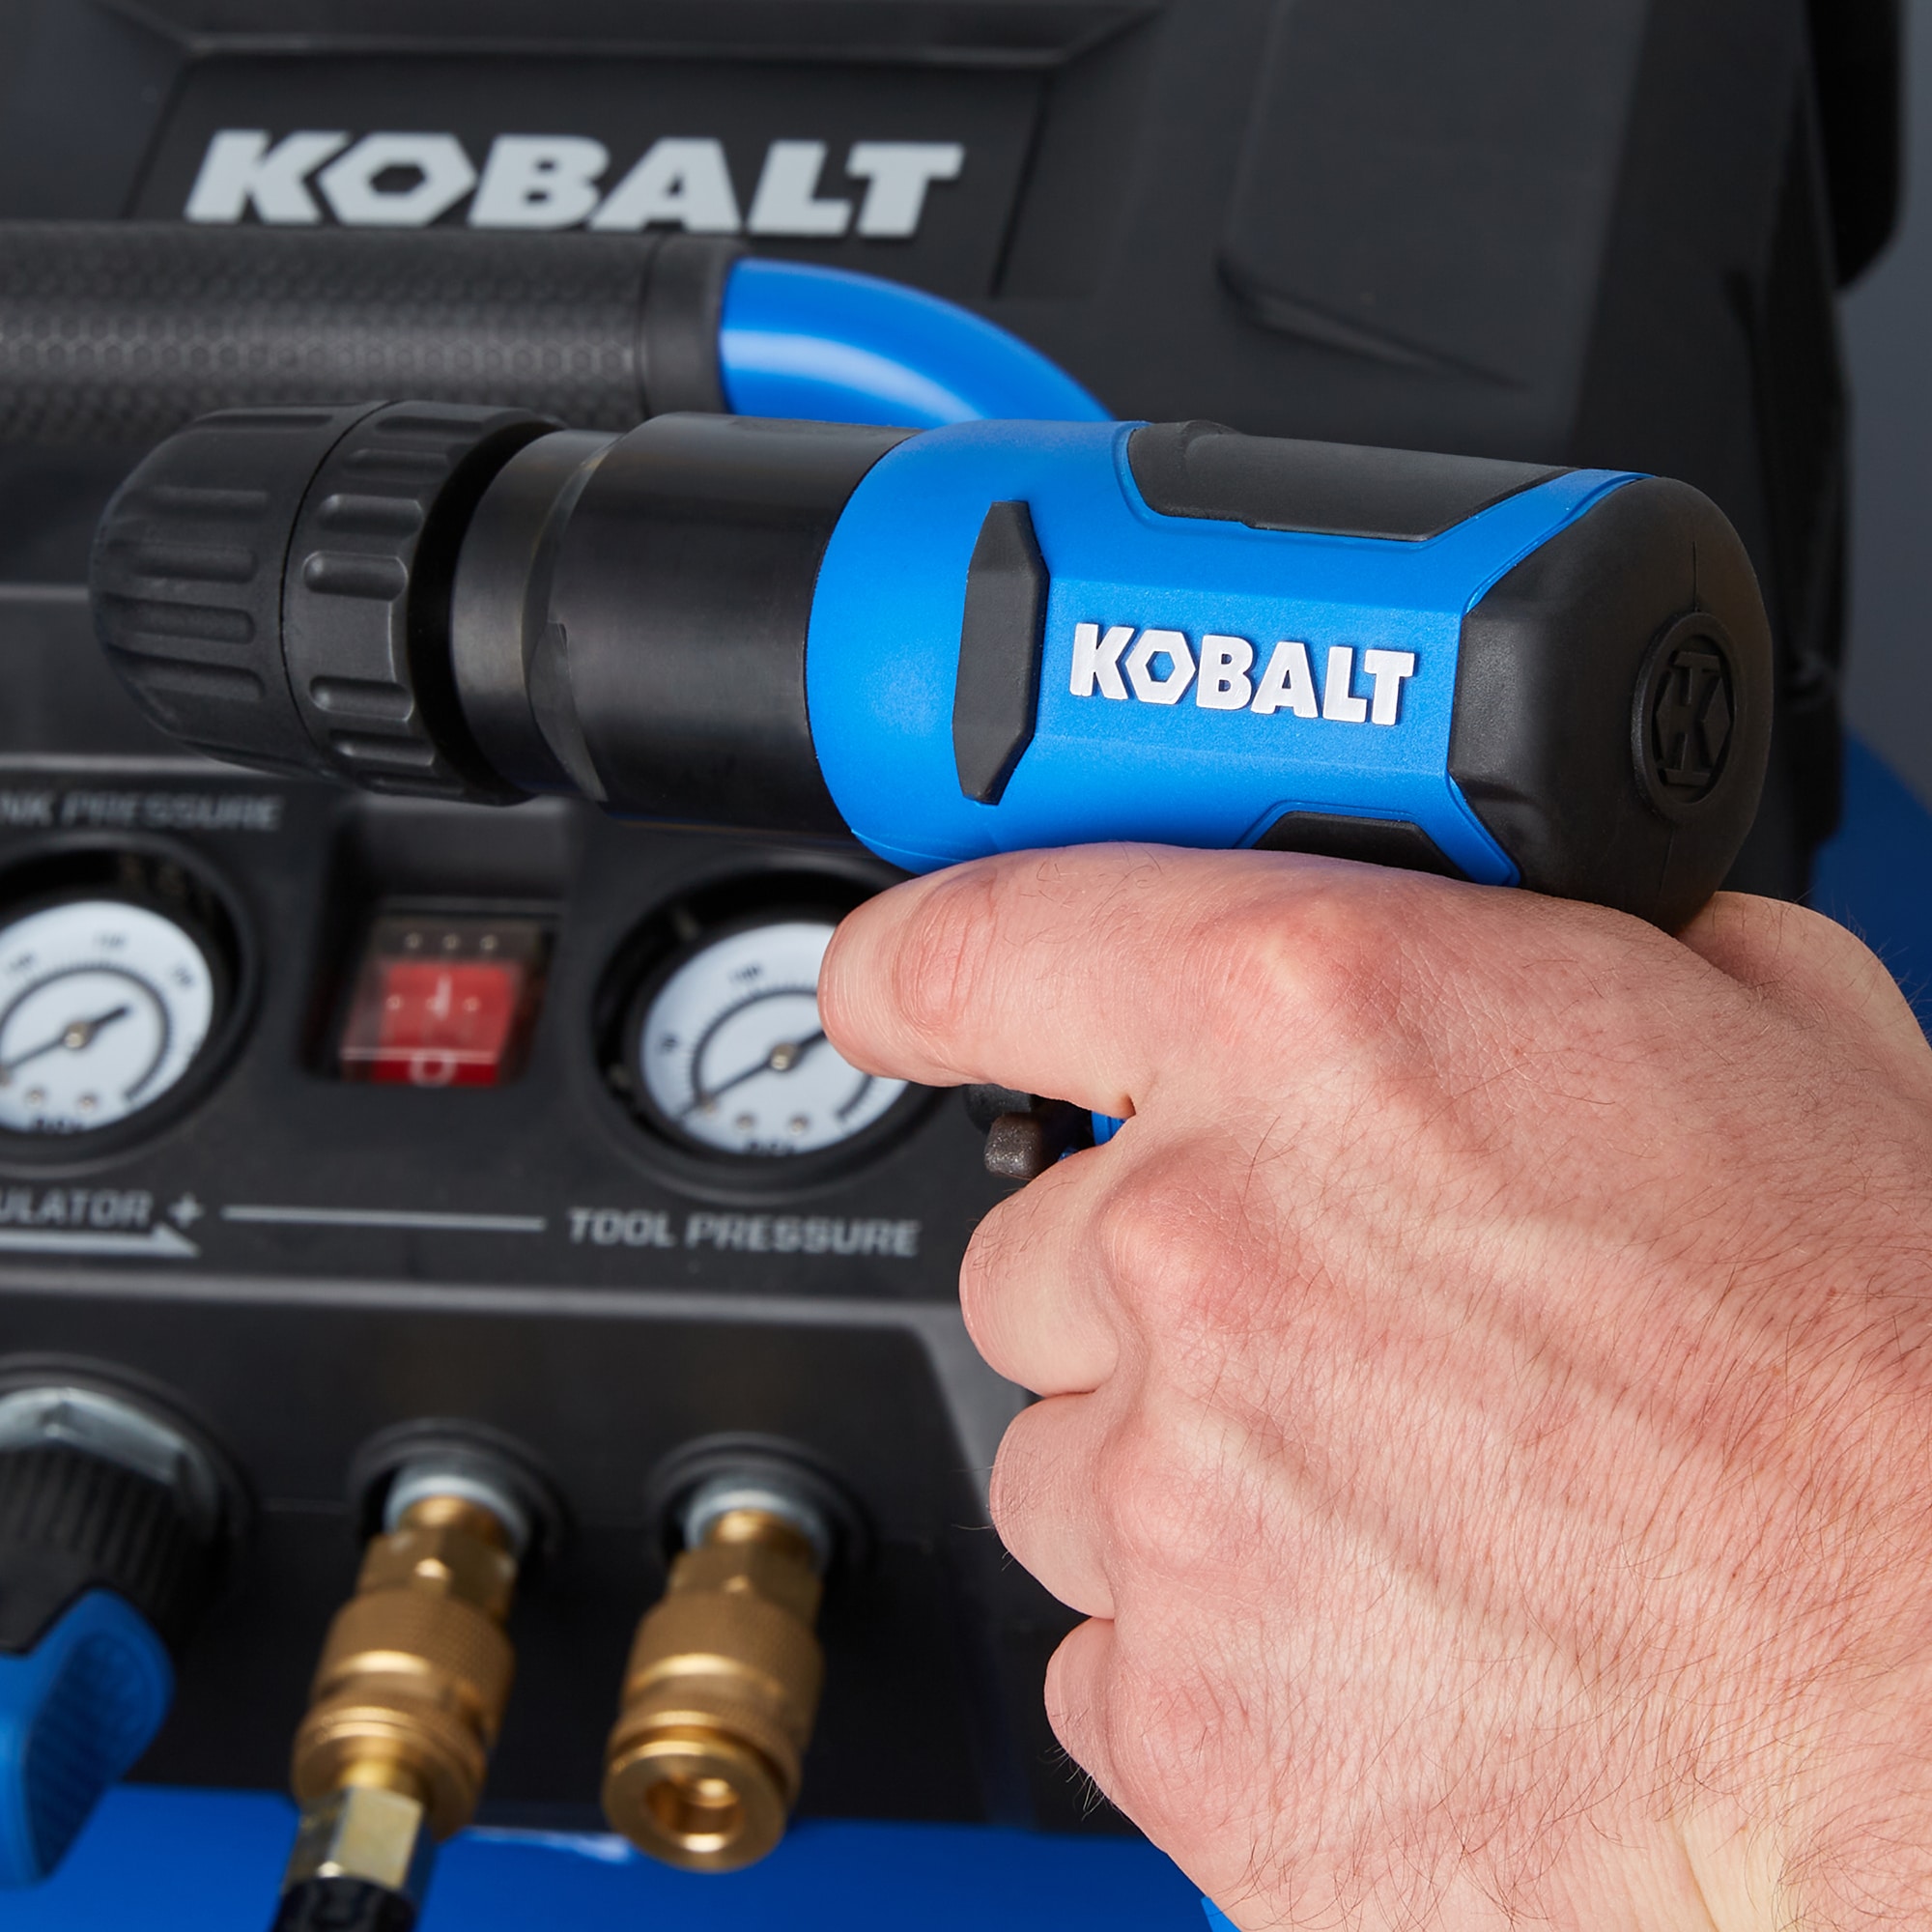 Kobalt Sgy-air222 3/8" Reversible Rocker Switch Air Drill for sale online 